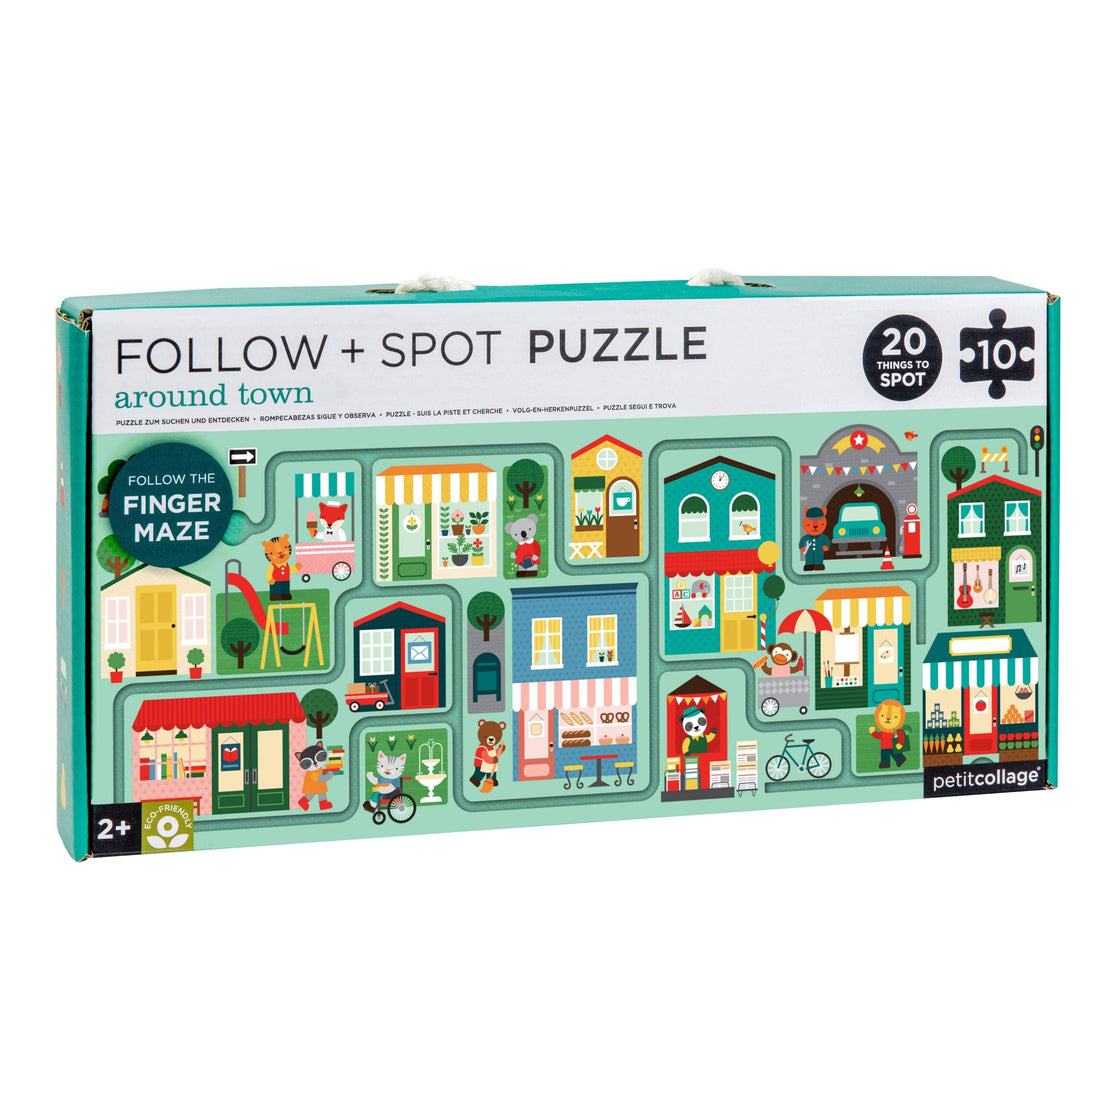 Around Town Follow + Spot Puzzle